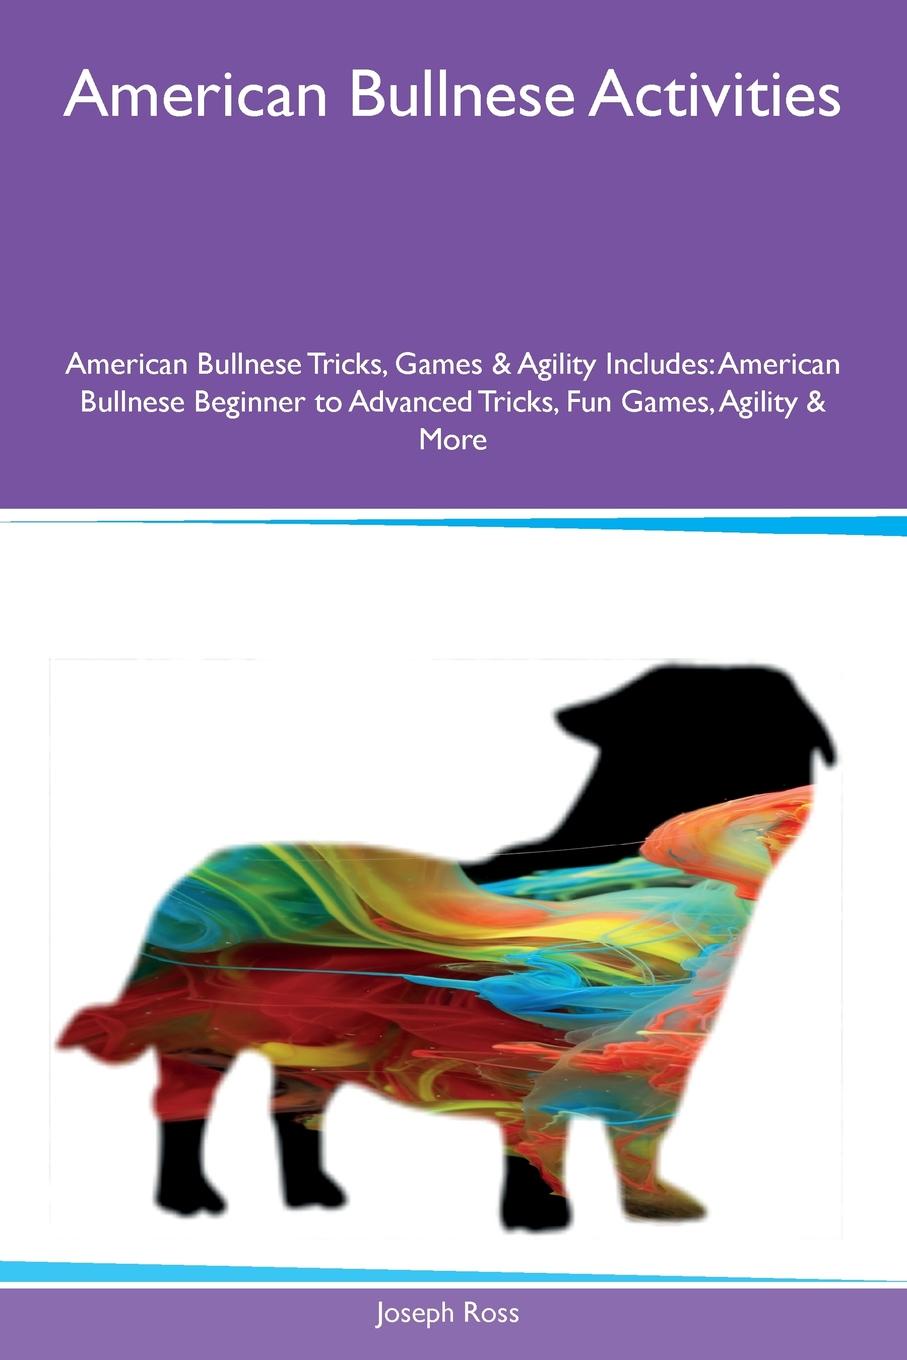 American Bullnese Activities American Bullnese Tricks, Games & Agility Includes. American Bullnese Beginner to Advanced Tricks, Fun Games, Agility & More